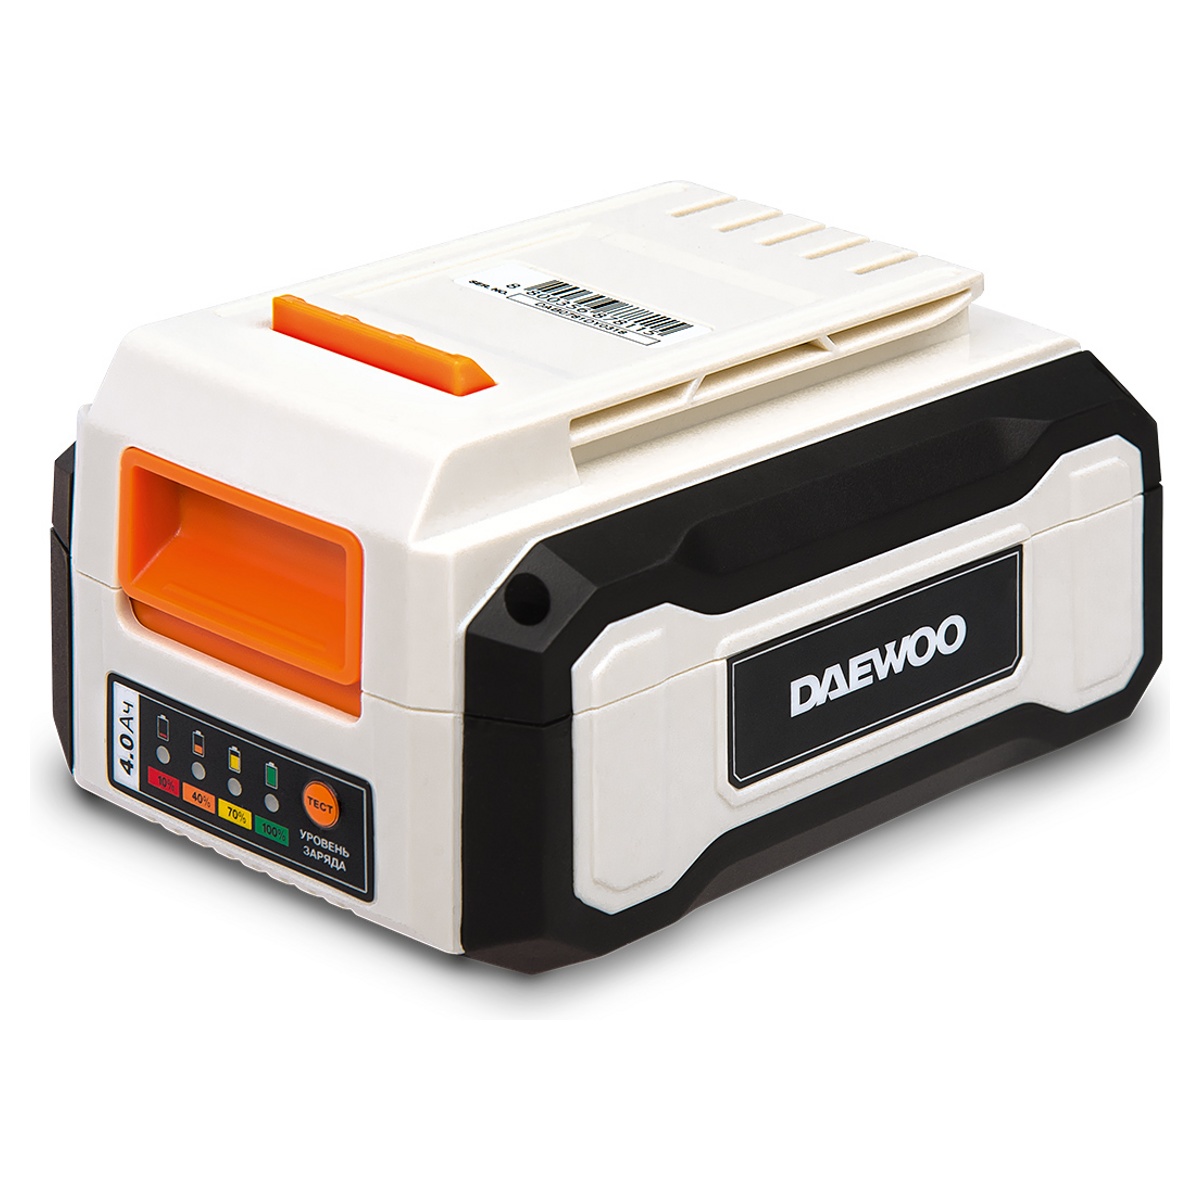 Аккумулятор Daewoo Power DABT 4040Li (40В/4 Ah)